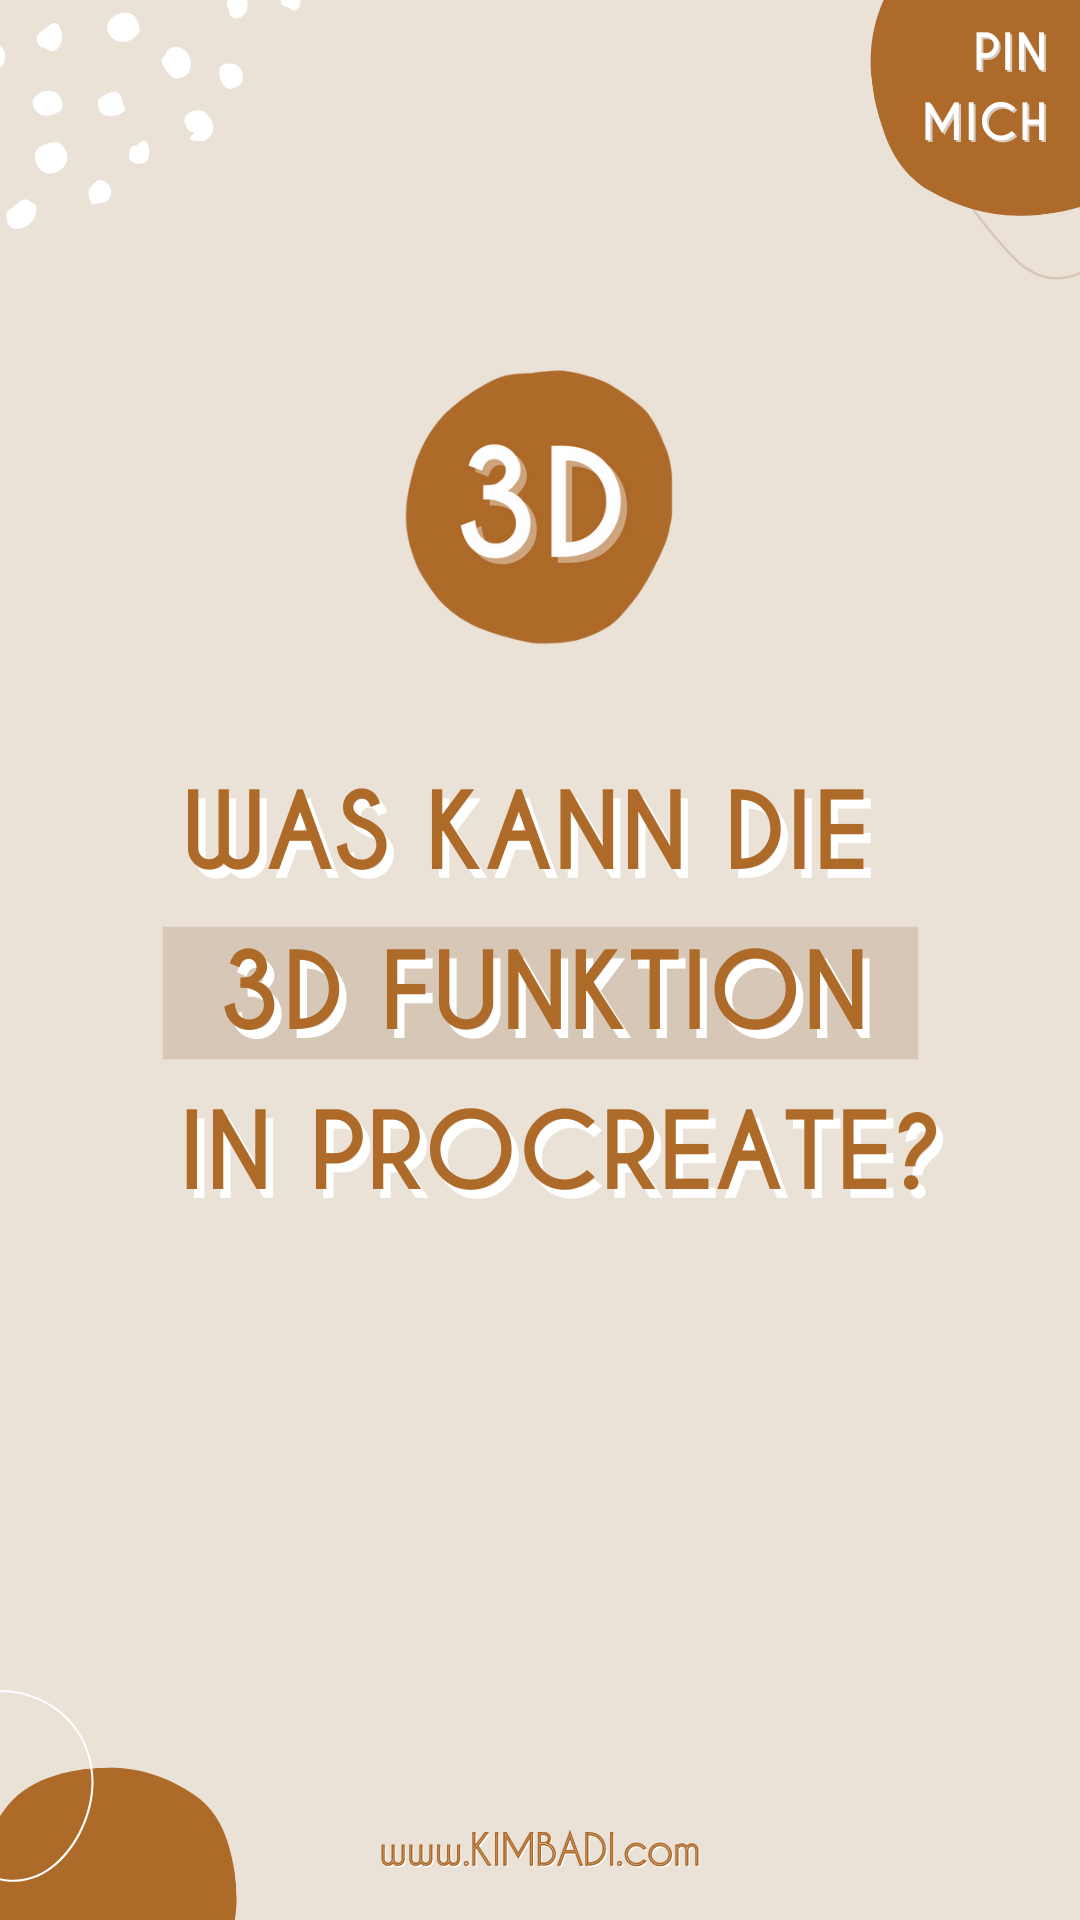 Pinterest Pin - Was kann die 3D Funktion in Procreate? - www.kimbadi.com